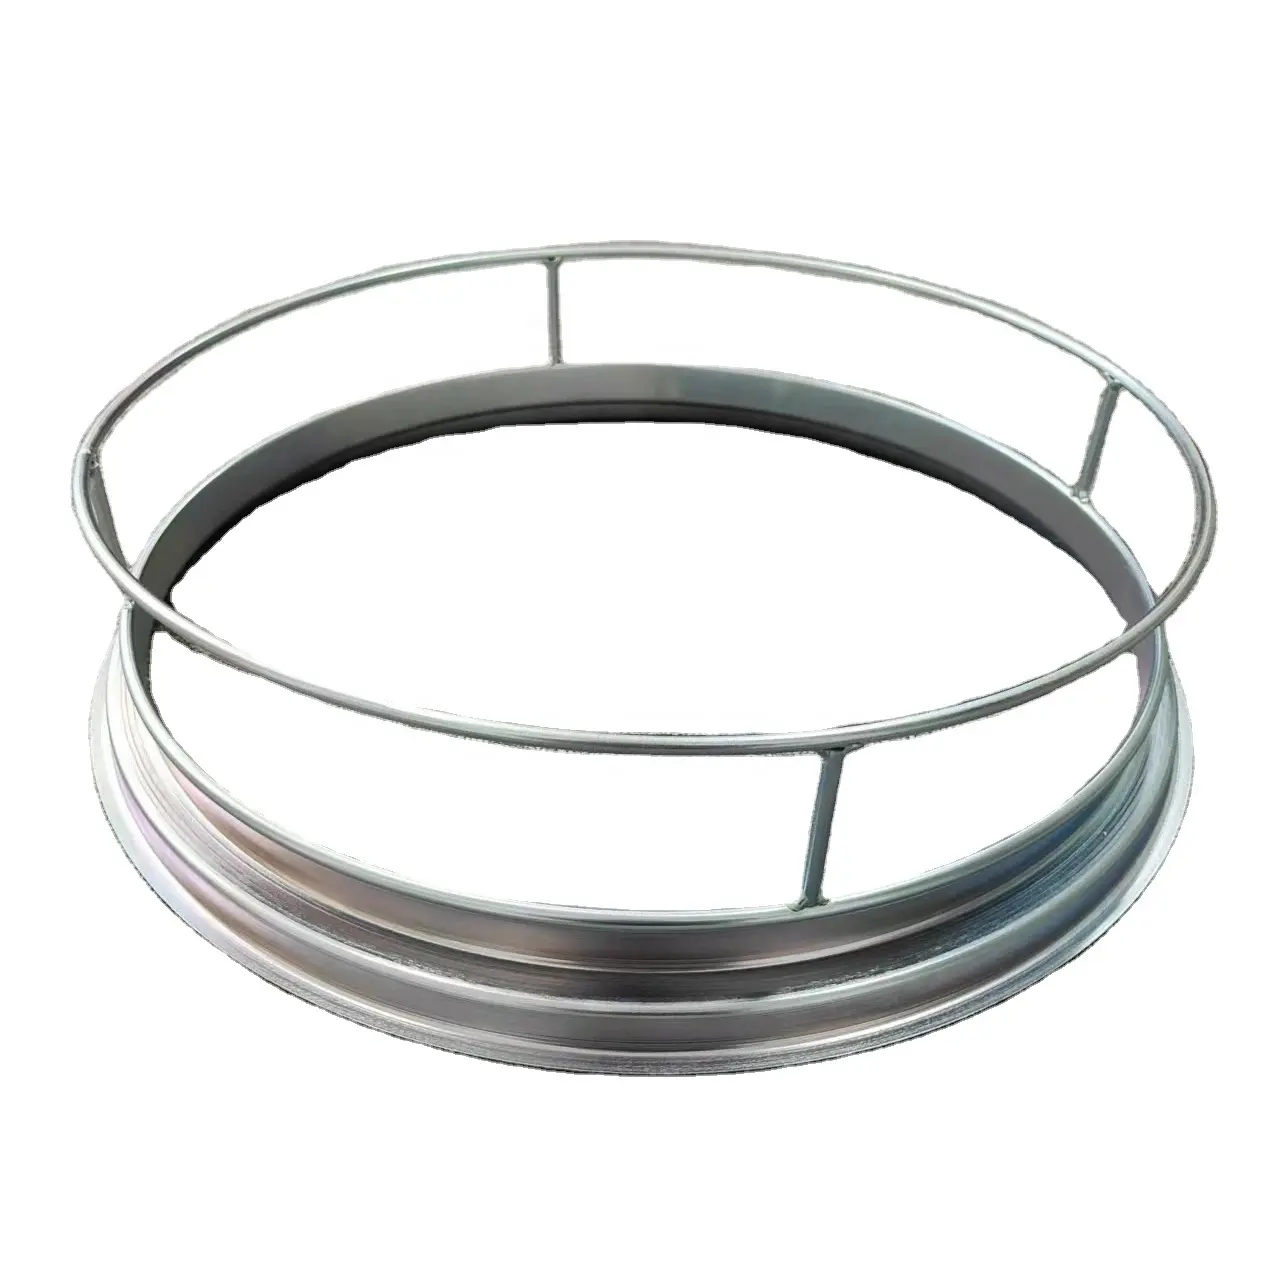 Individuelle CNC Blechfertigung industrieller Metallspinnbereich Kreisförmiger Rahmen Bauteil Spinnteile